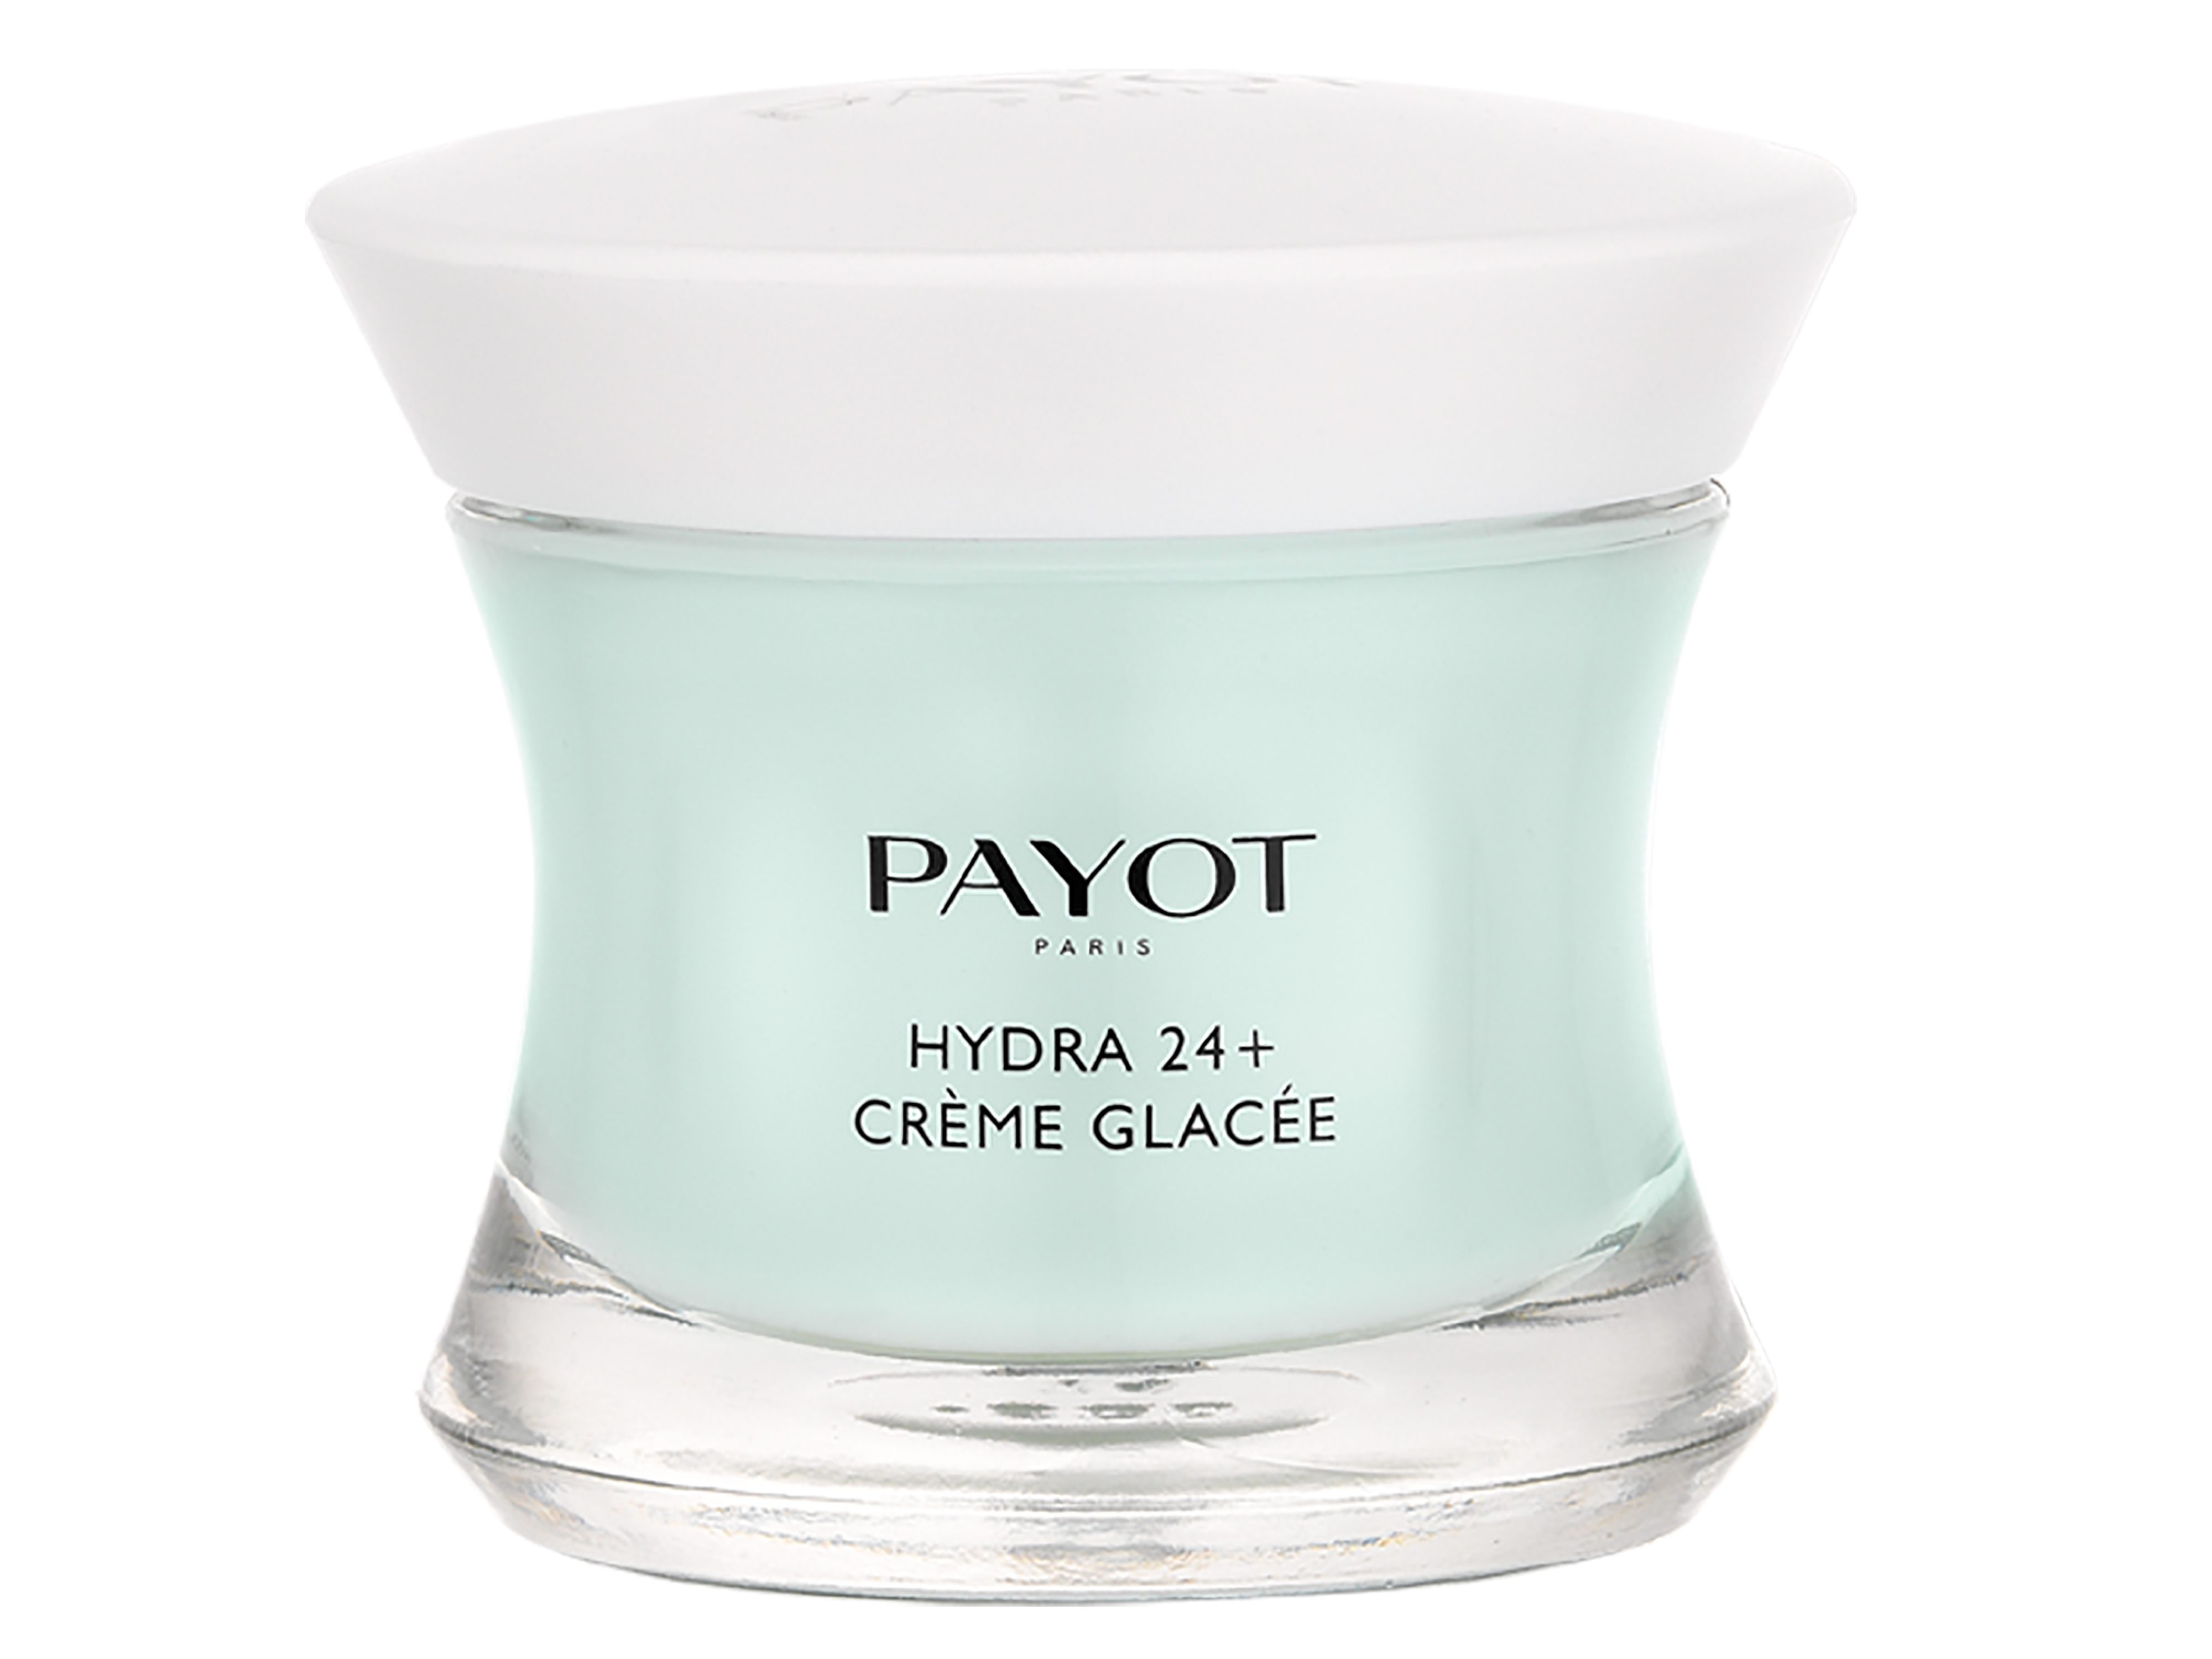 Payot Payot Hydra 24+ Creme Glacee, 50